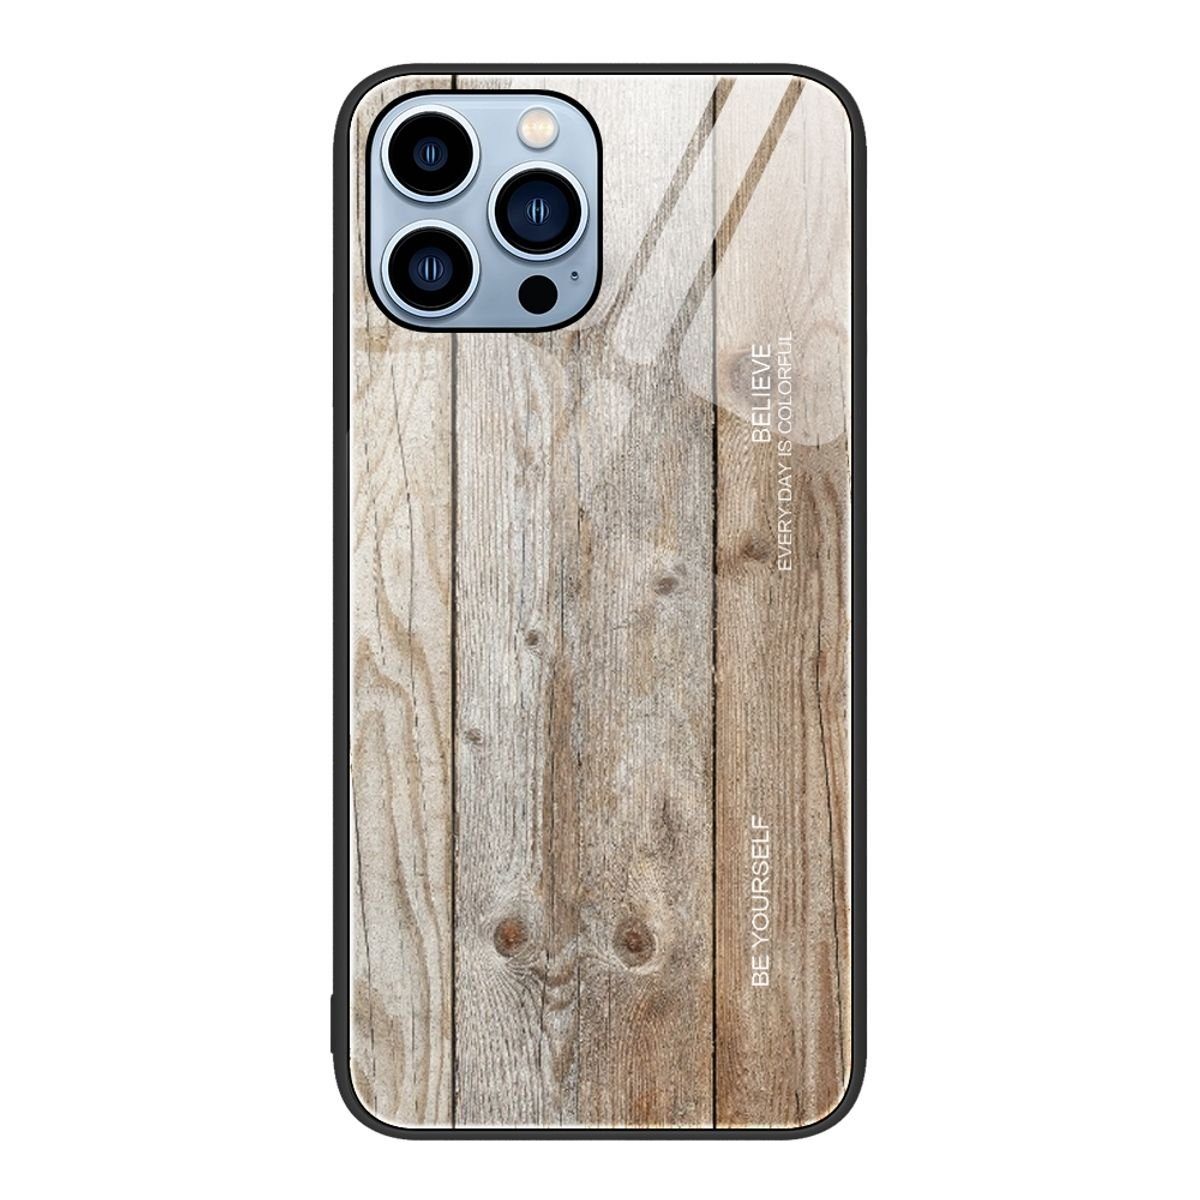 König Design Handyhülle Apple iPhone 11 Pro, Schutzhülle Case Cover Backcover Etuis Bumper